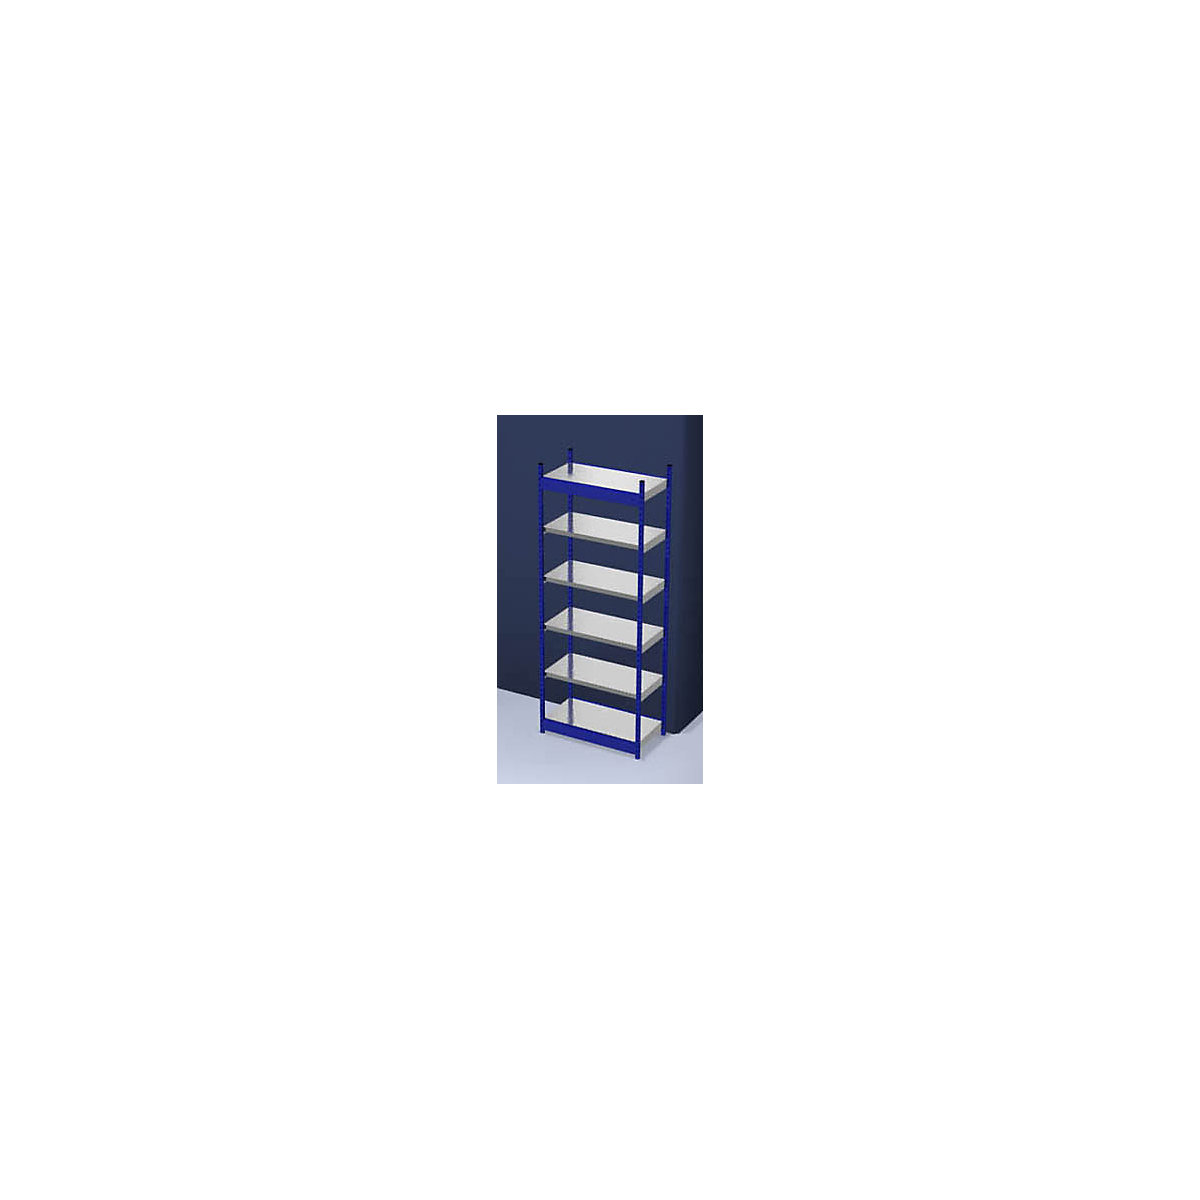 Stable boltless shelf unit, single sided – hofe, shelf unit height 2500 mm, blue / zinc-plated, shelf width 1025 mm, basic shelf unit, width x depth 1025 x 500 mm-6